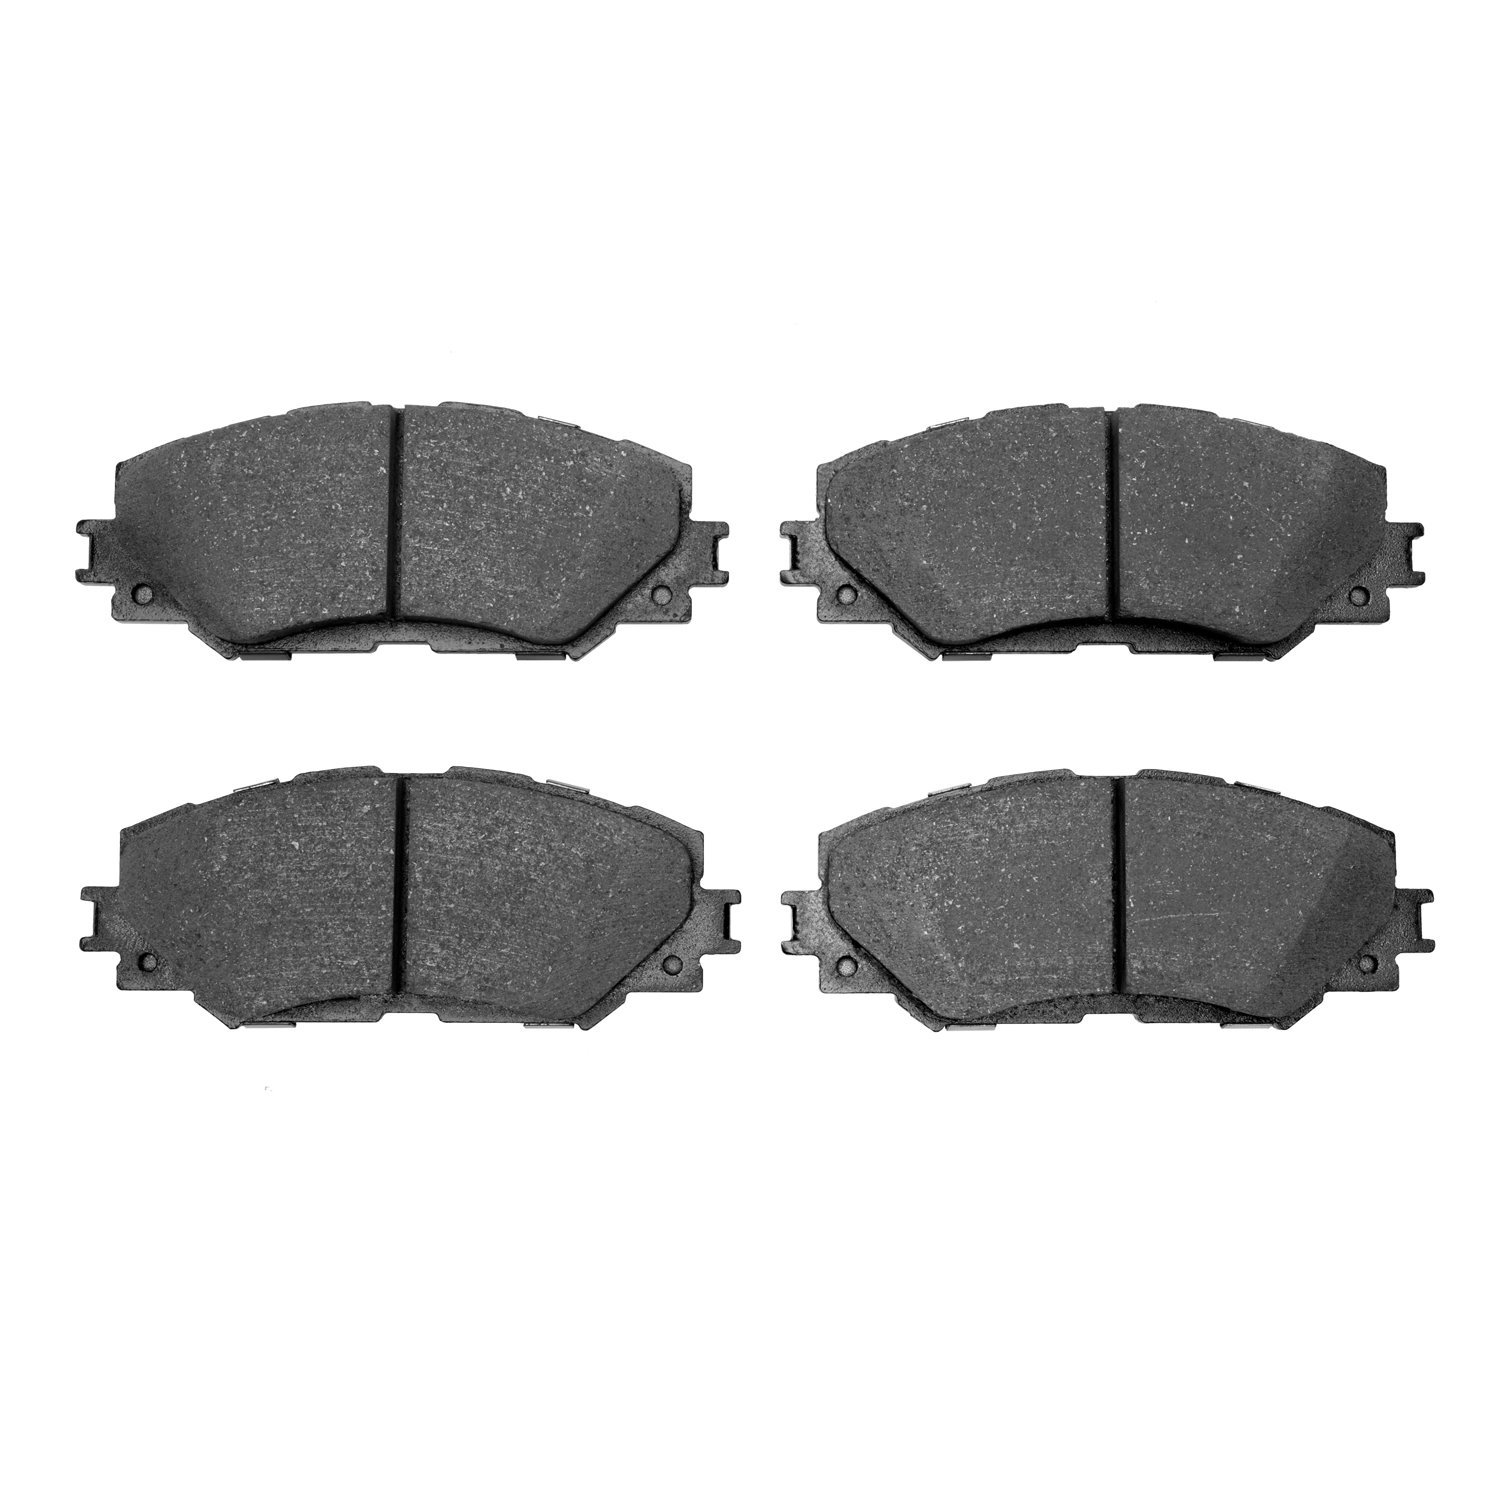 1310-1210-00 3000-Series Ceramic Brake Pads, 2006-2019 Multiple Makes/Models, Position: Front